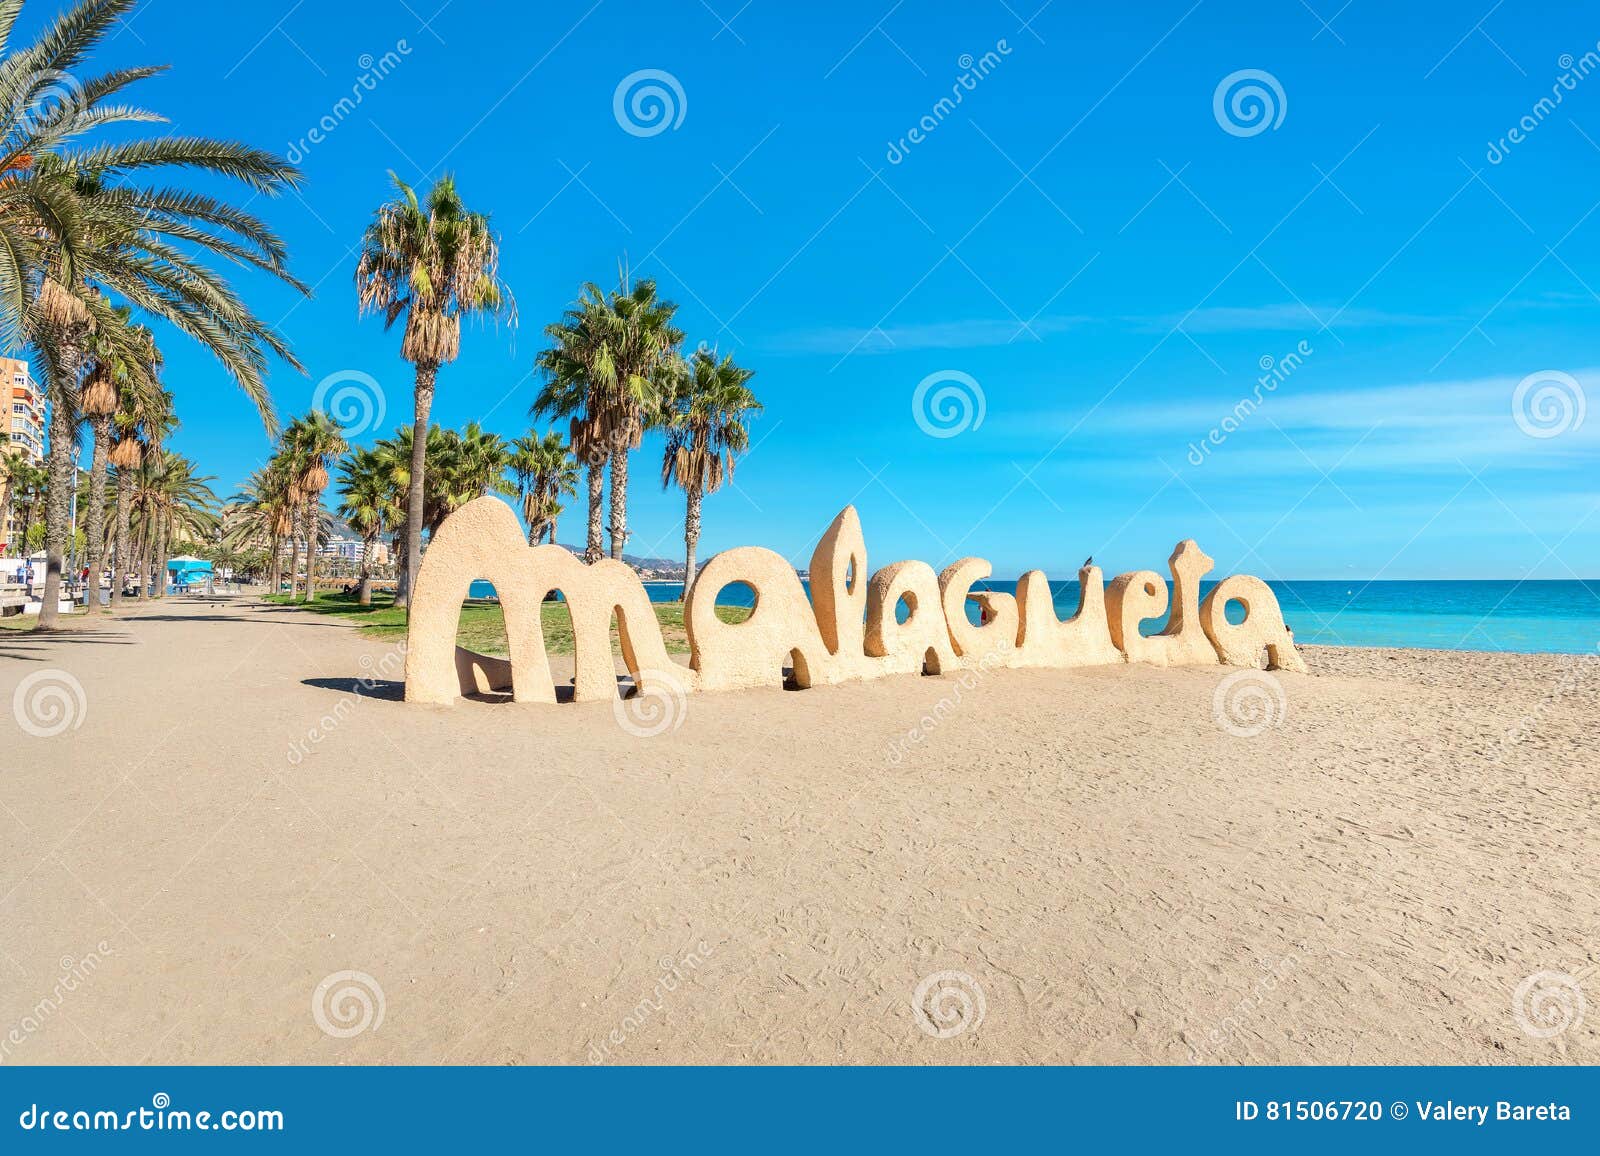 malagueta beach in malaga. andalusia, spain